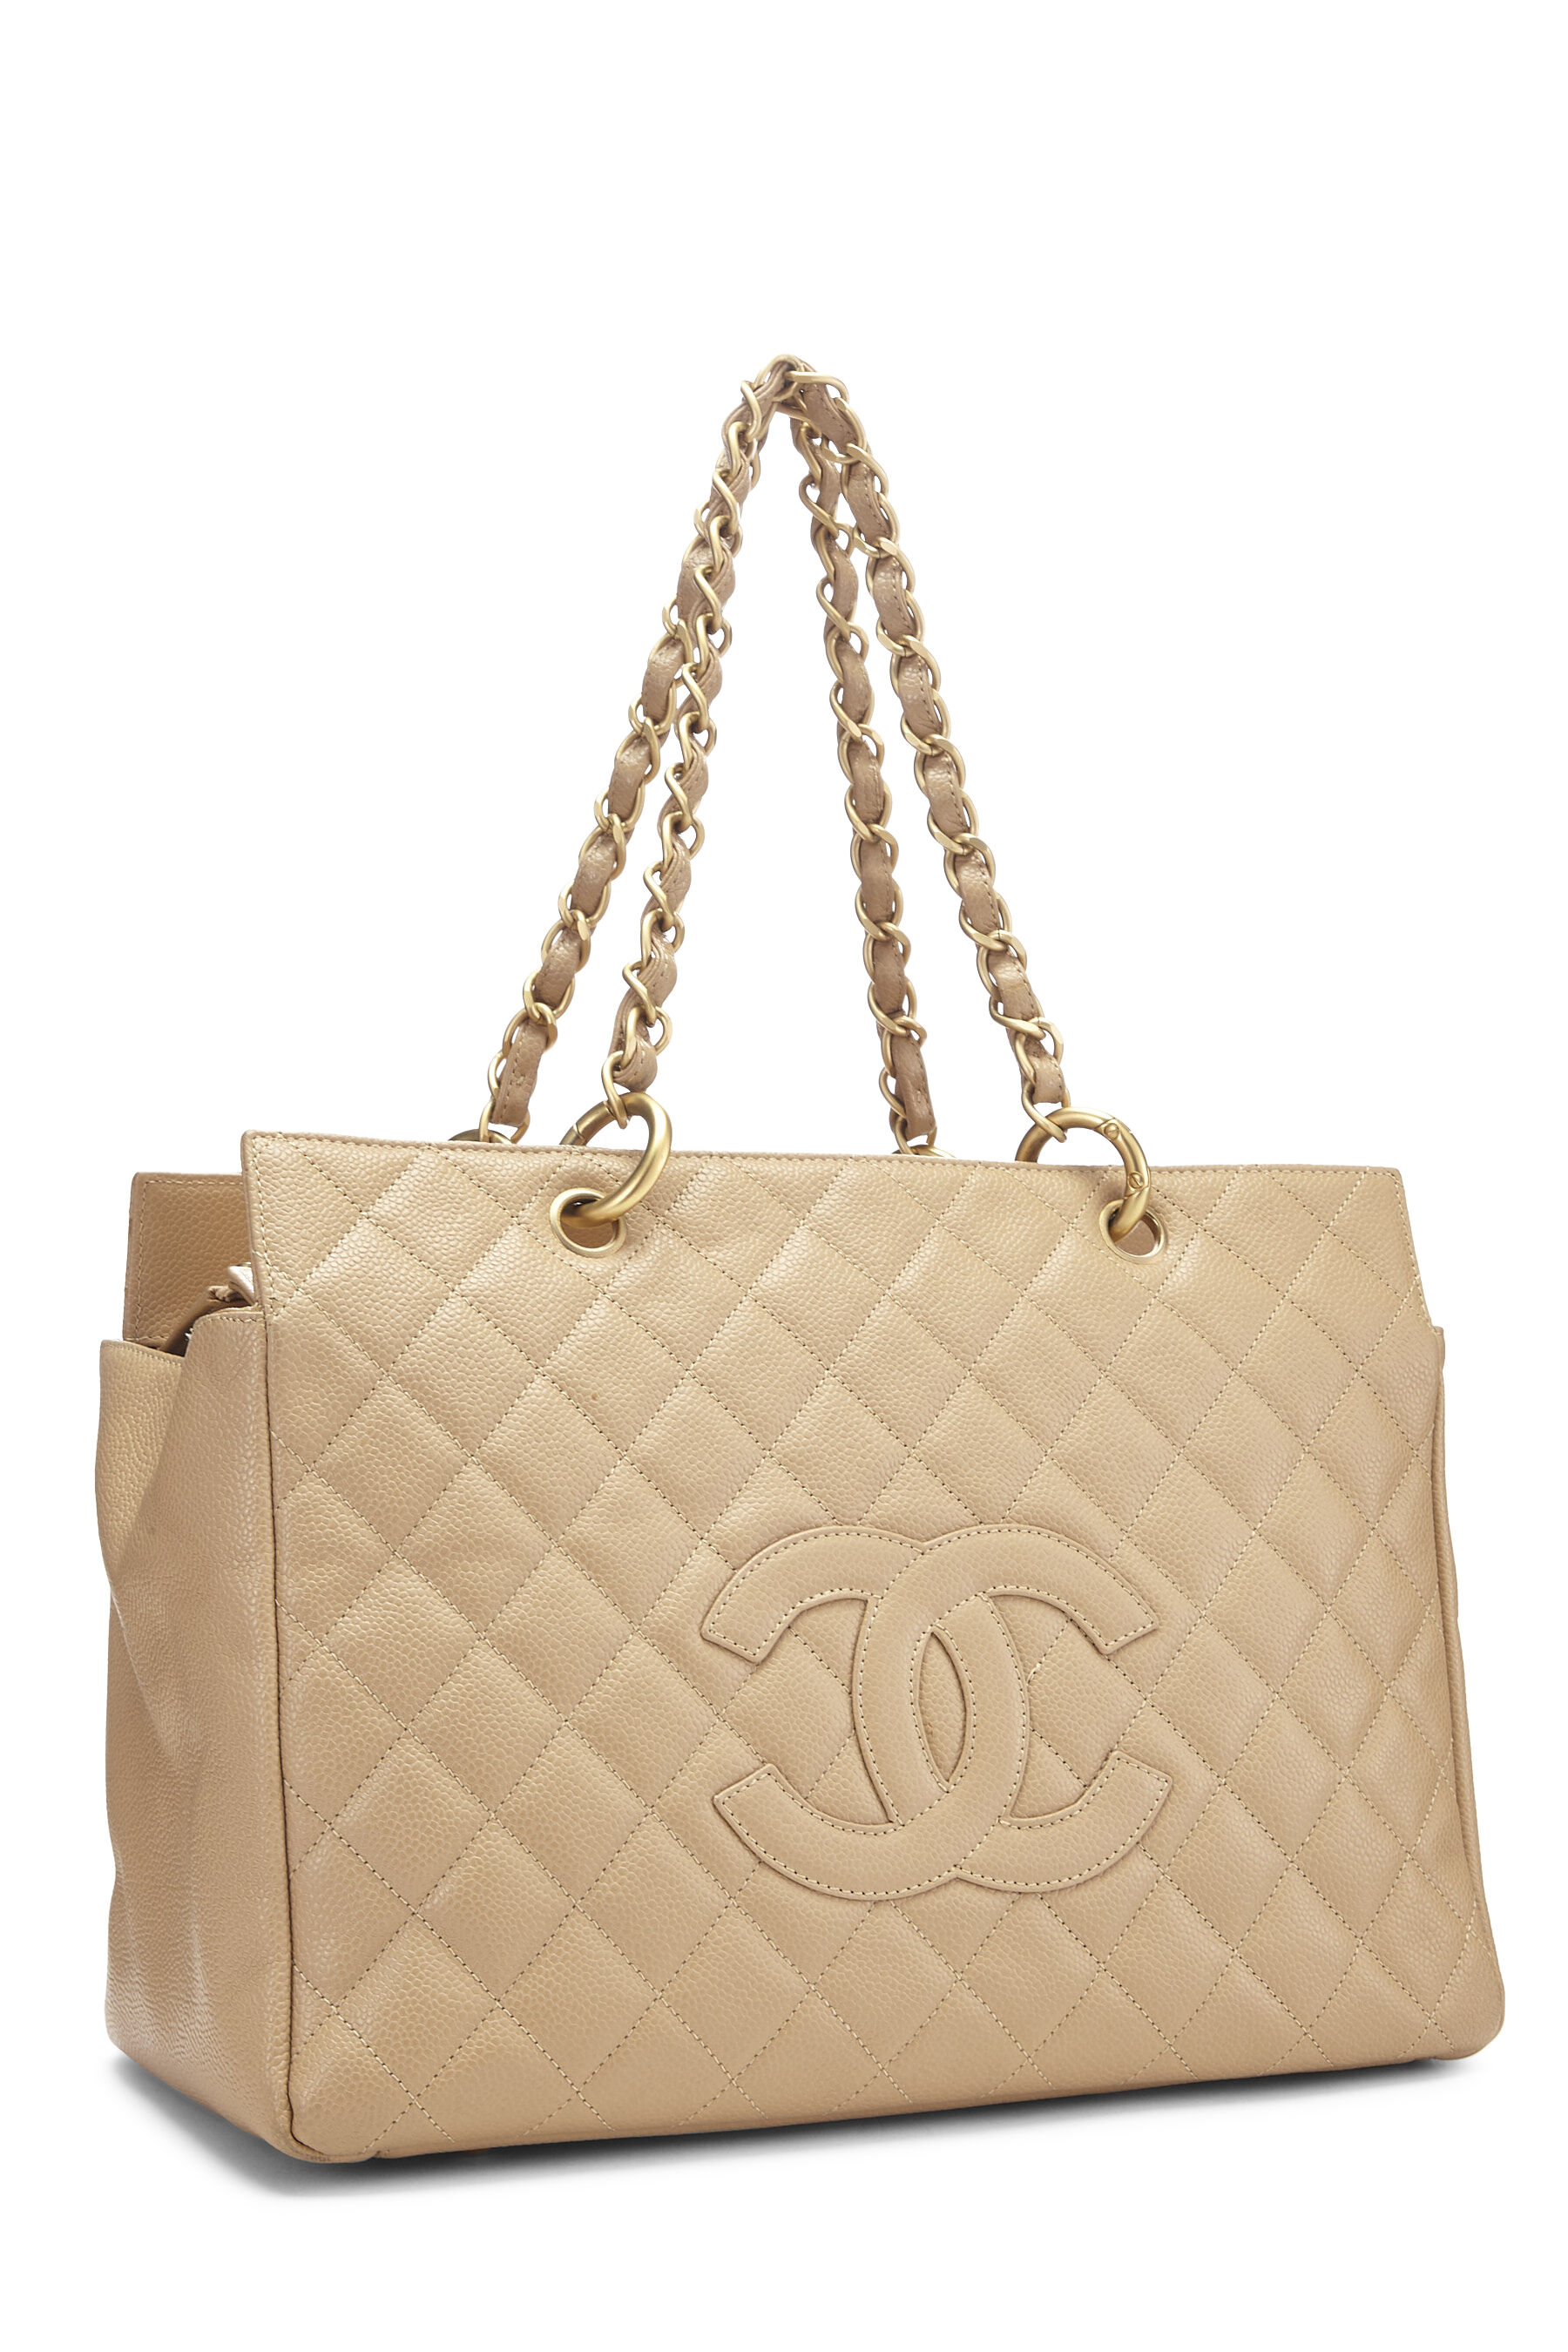 Chanel // 2015/16 Beige Caviar Small Shopping Tote Bag – VSP